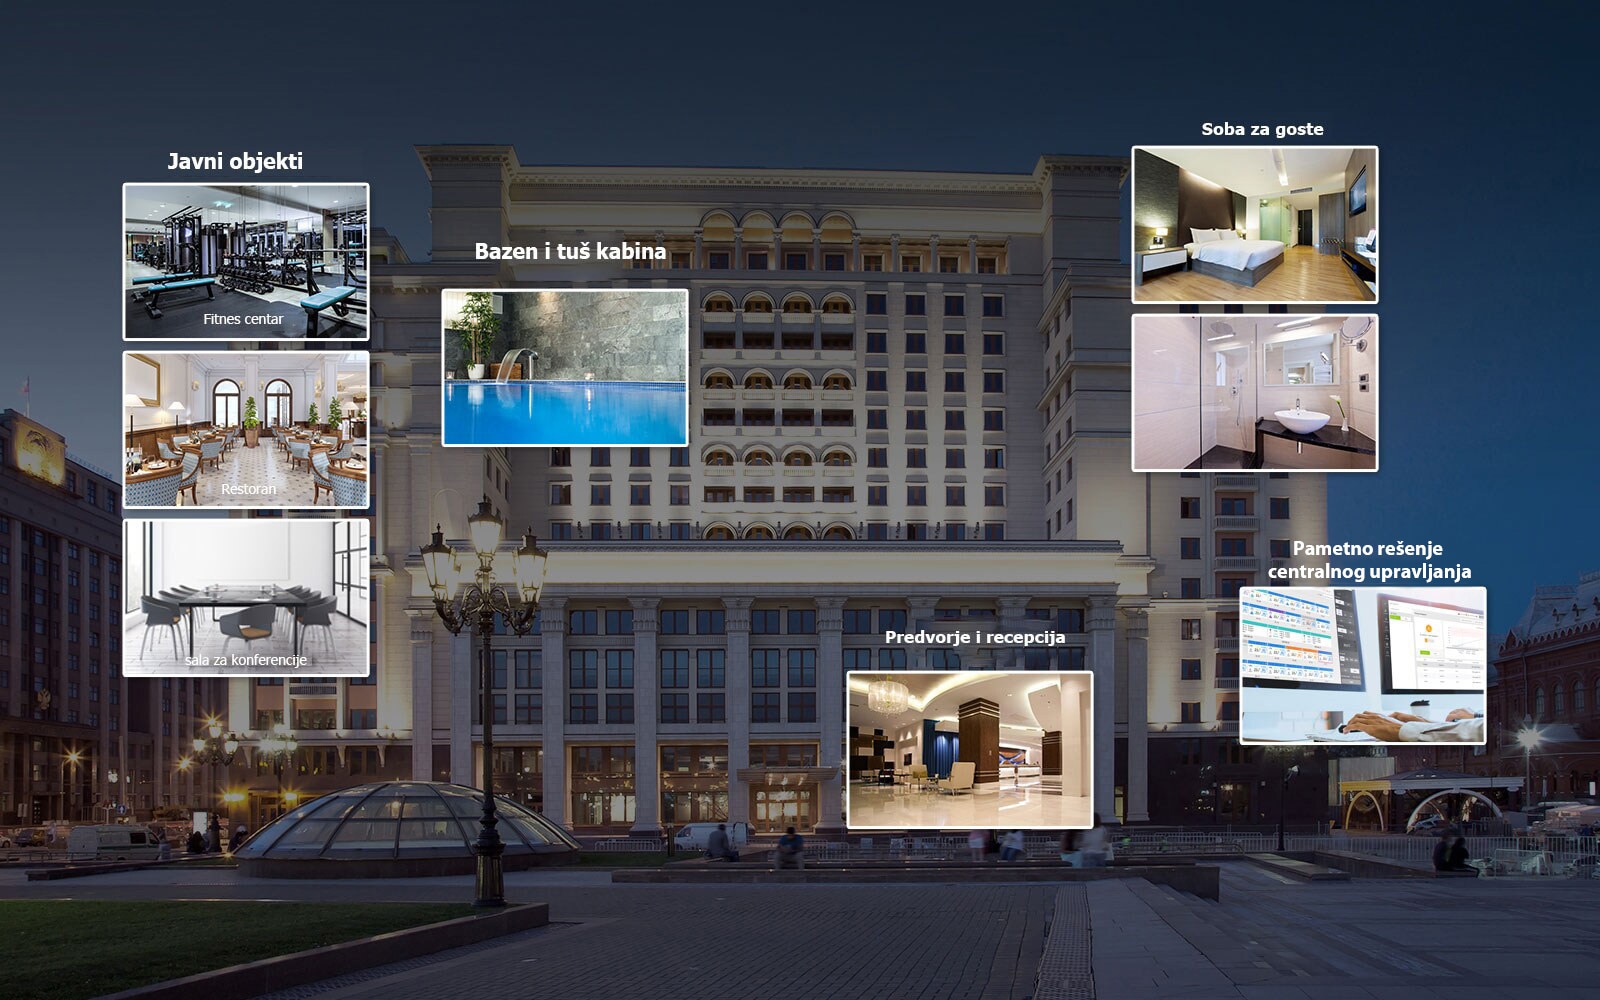 Slika hotela sa sličicama javnih ustanova, bazena, gostinske sobe, lobija i centra za upravljanje.